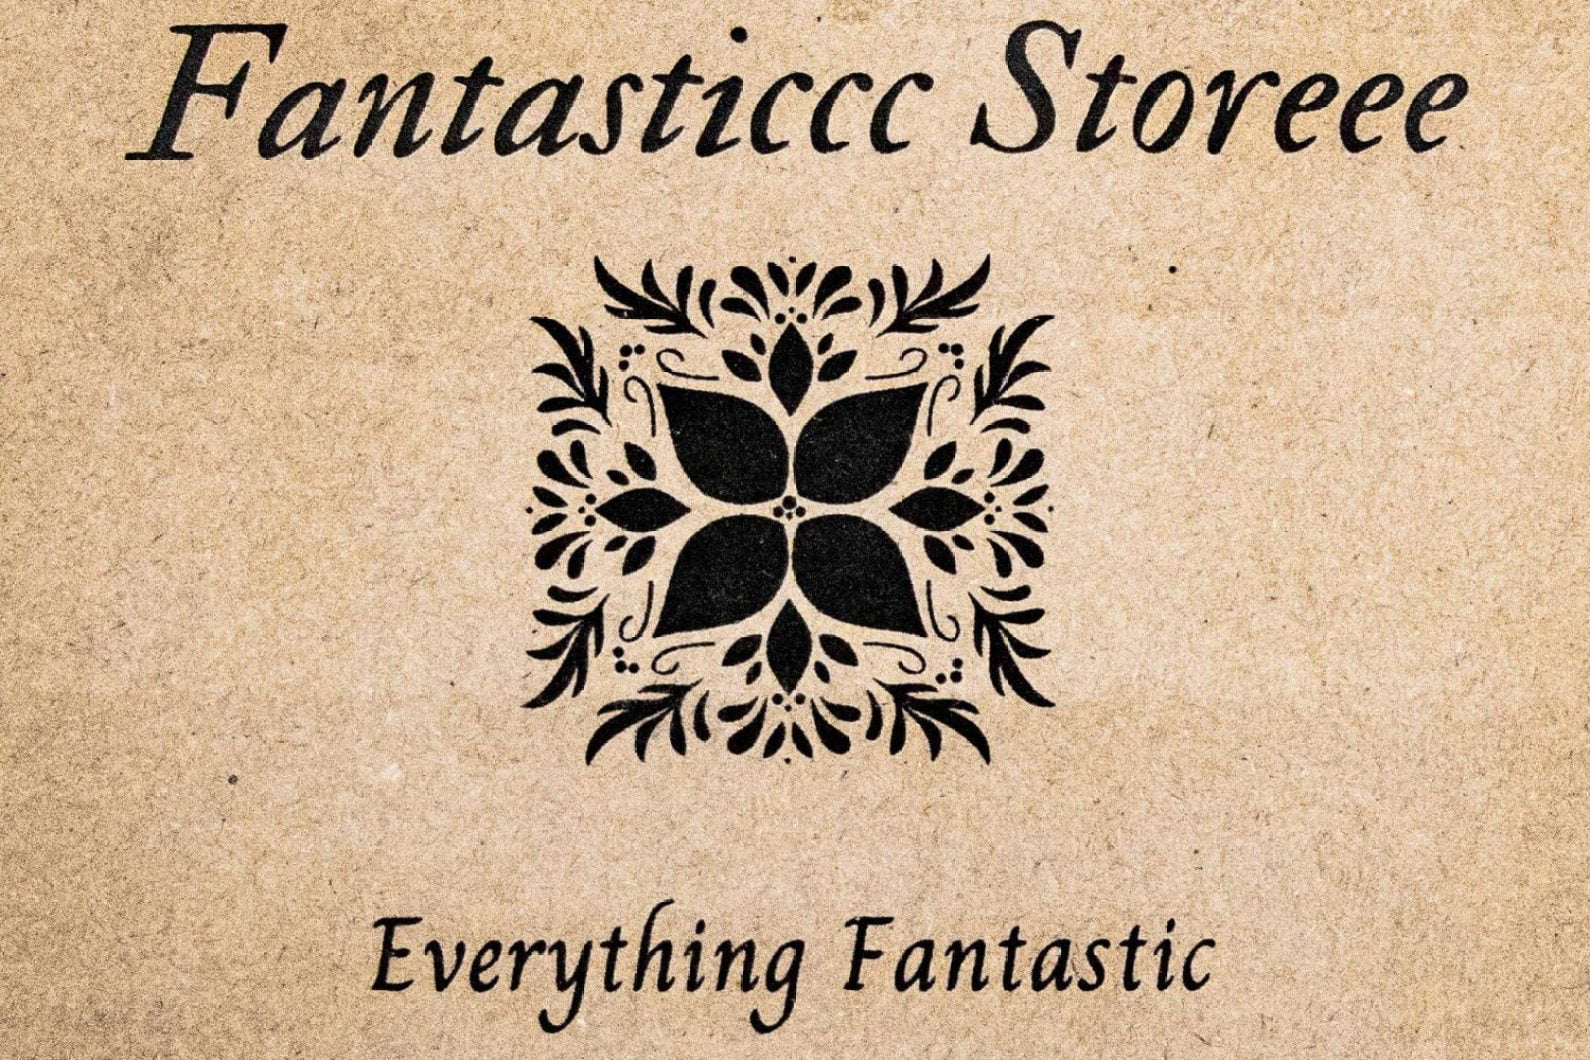 Hot Stones for Massages Set of 8 Large Basalt Stones by Fantasticcc Storeee Massage Stone Kit 